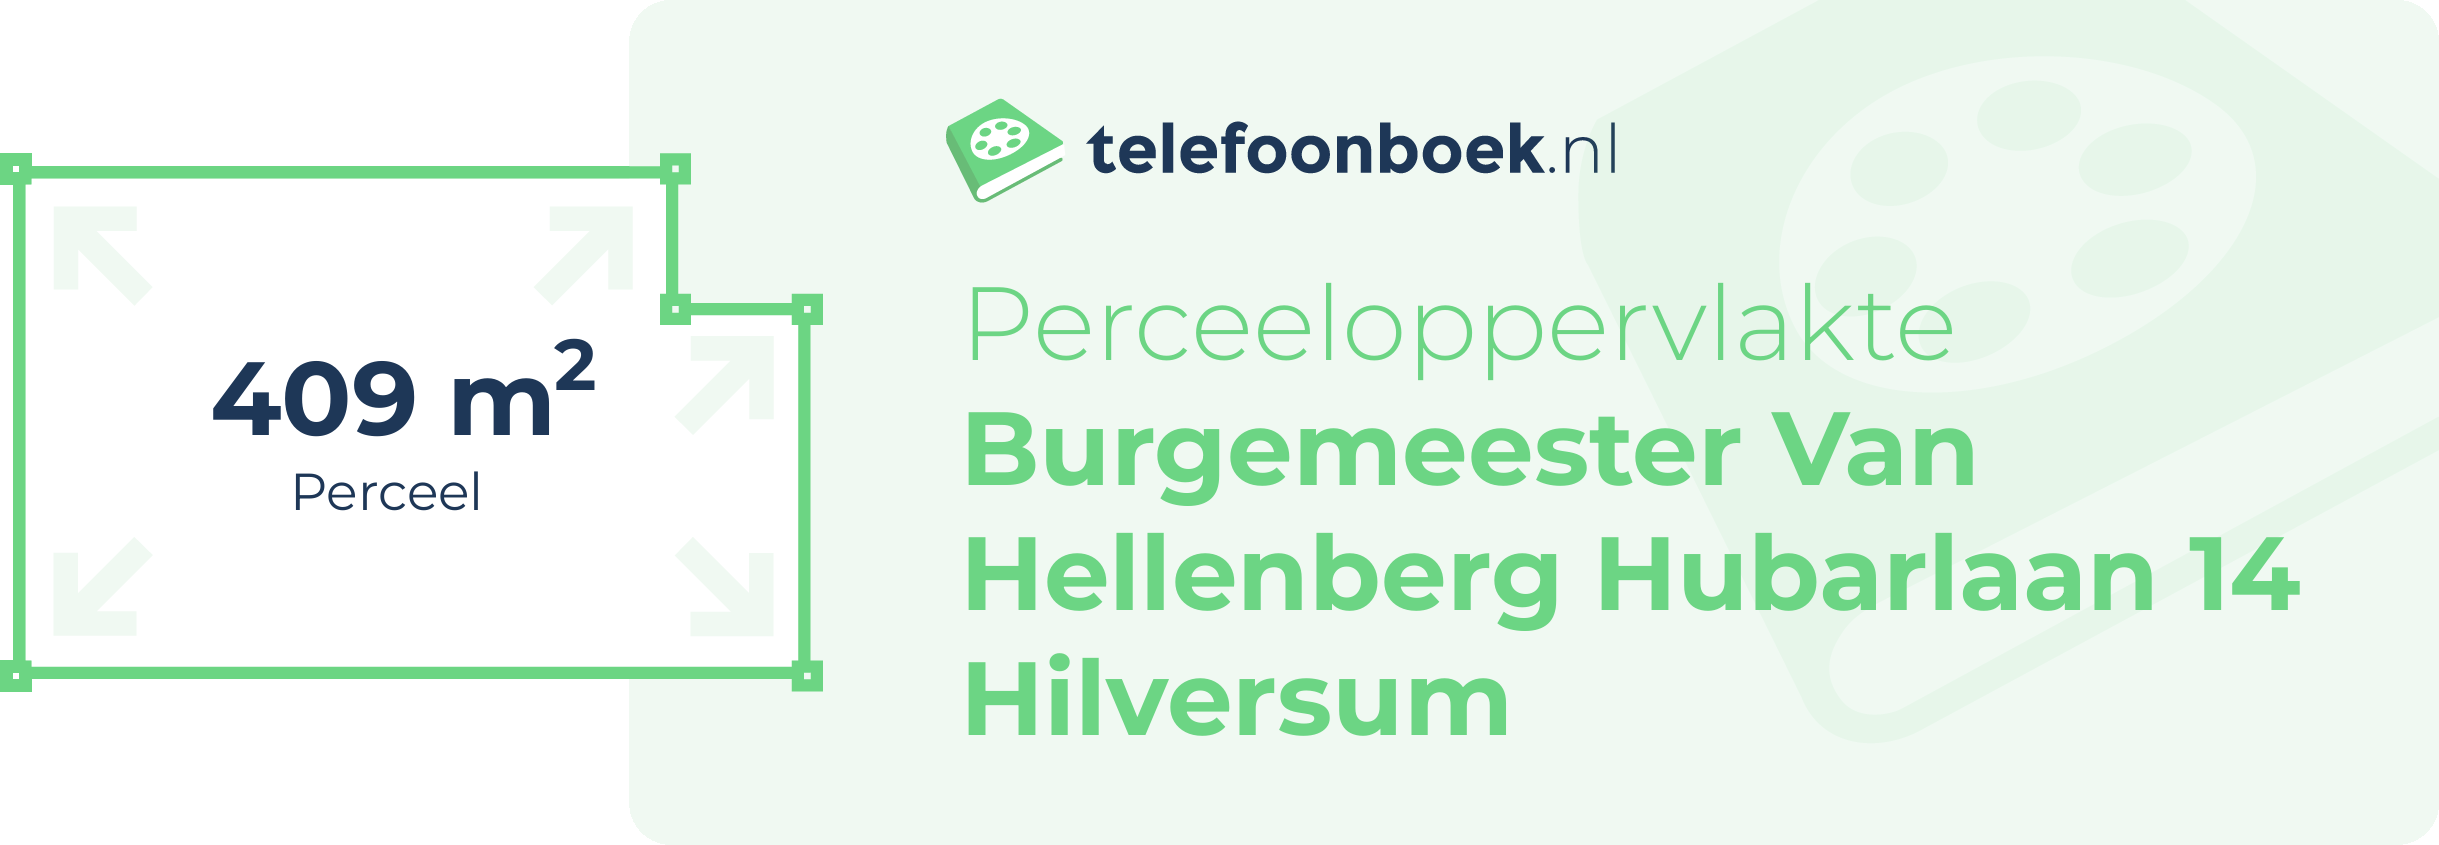 Perceeloppervlakte Burgemeester Van Hellenberg Hubarlaan 14 Hilversum